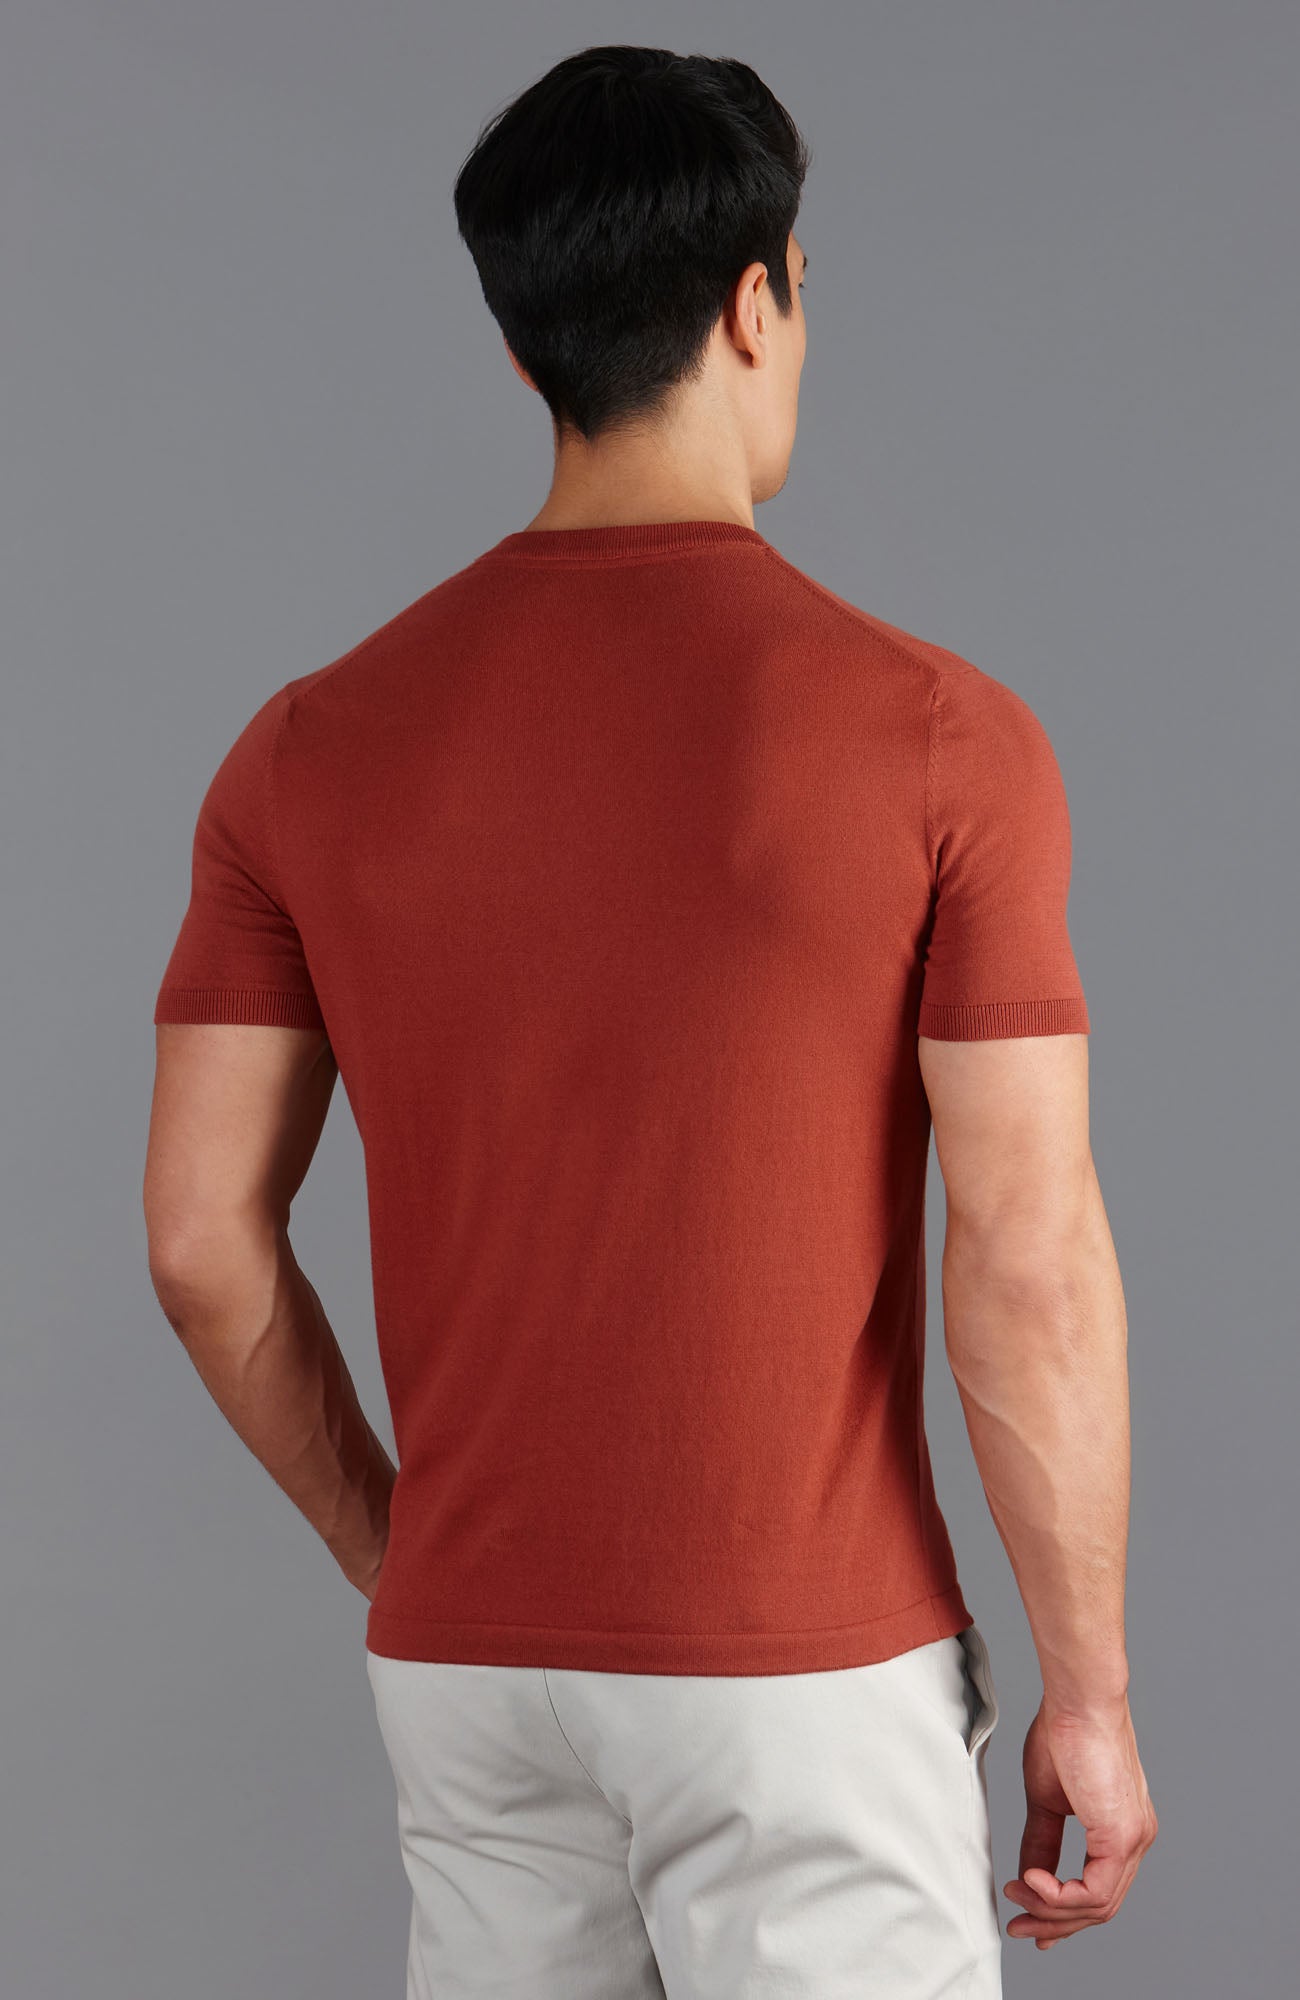 Mens 100% Ultra Fine Cotton Knitted T-Shirt